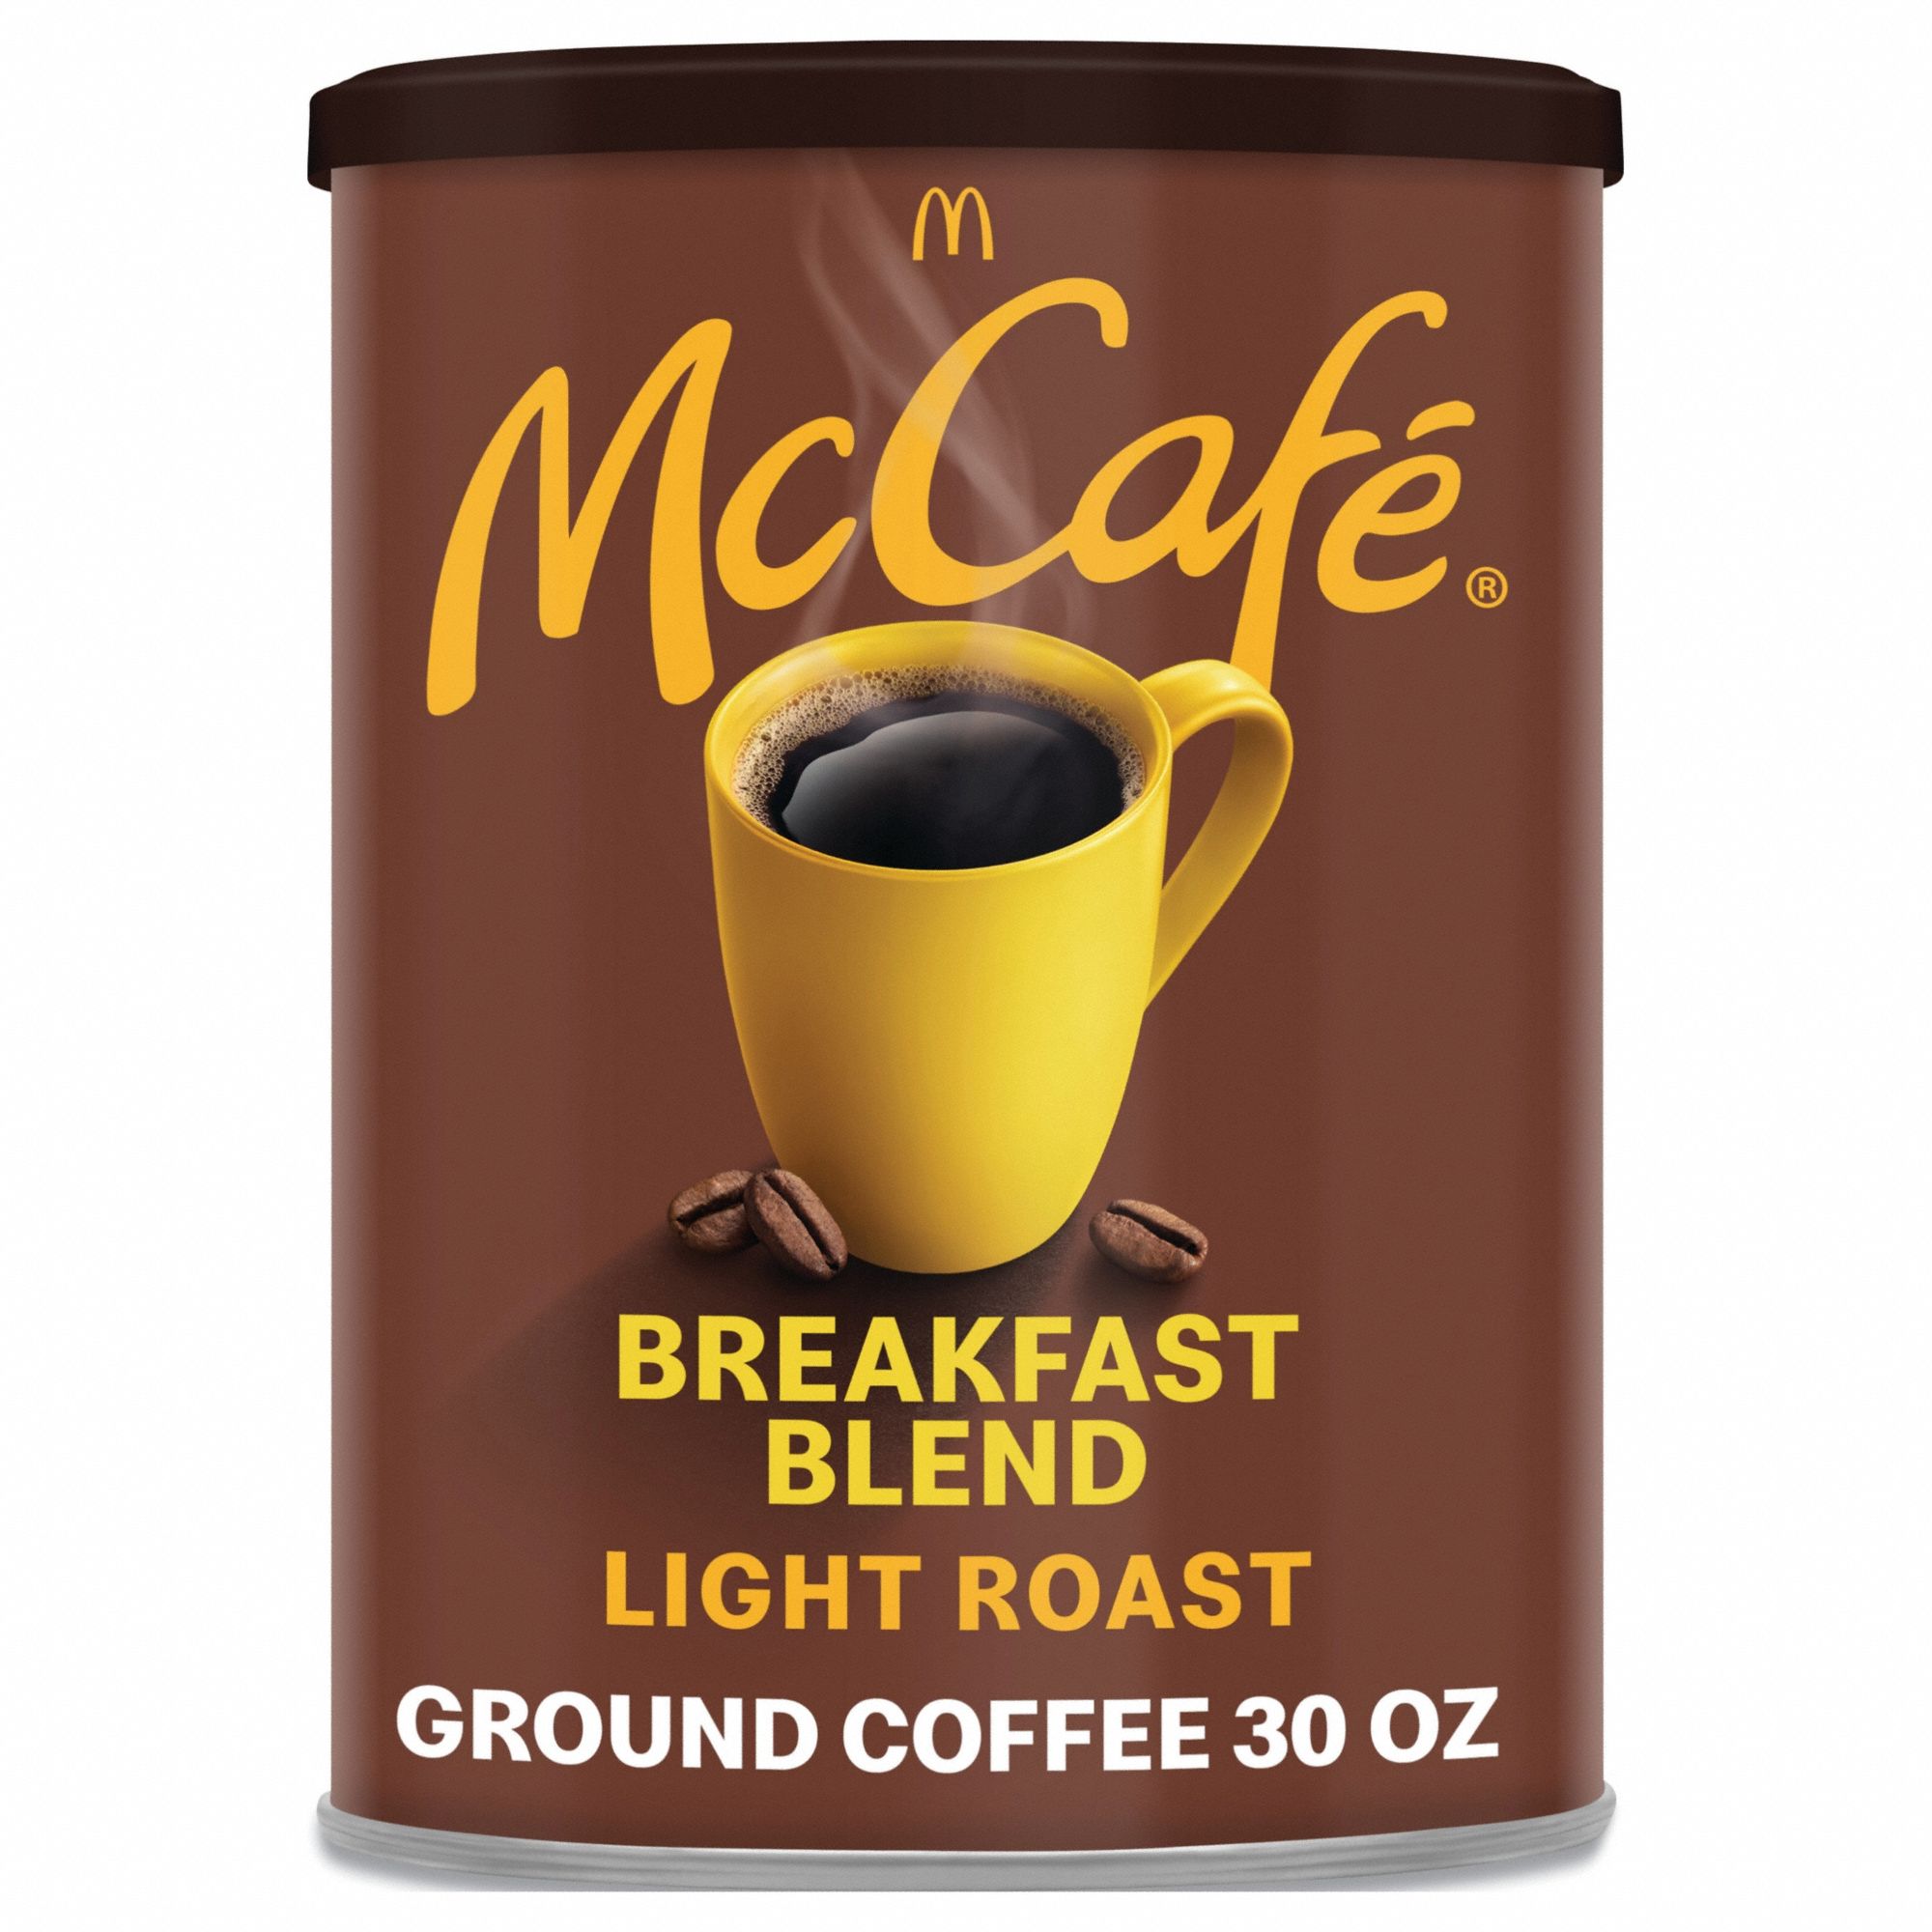 Coffee Bulk Ground: Caffeinated, Breakfast Blend, Can, 1.88 lb Pack Wt, 1.88 lb Net Wt, Light